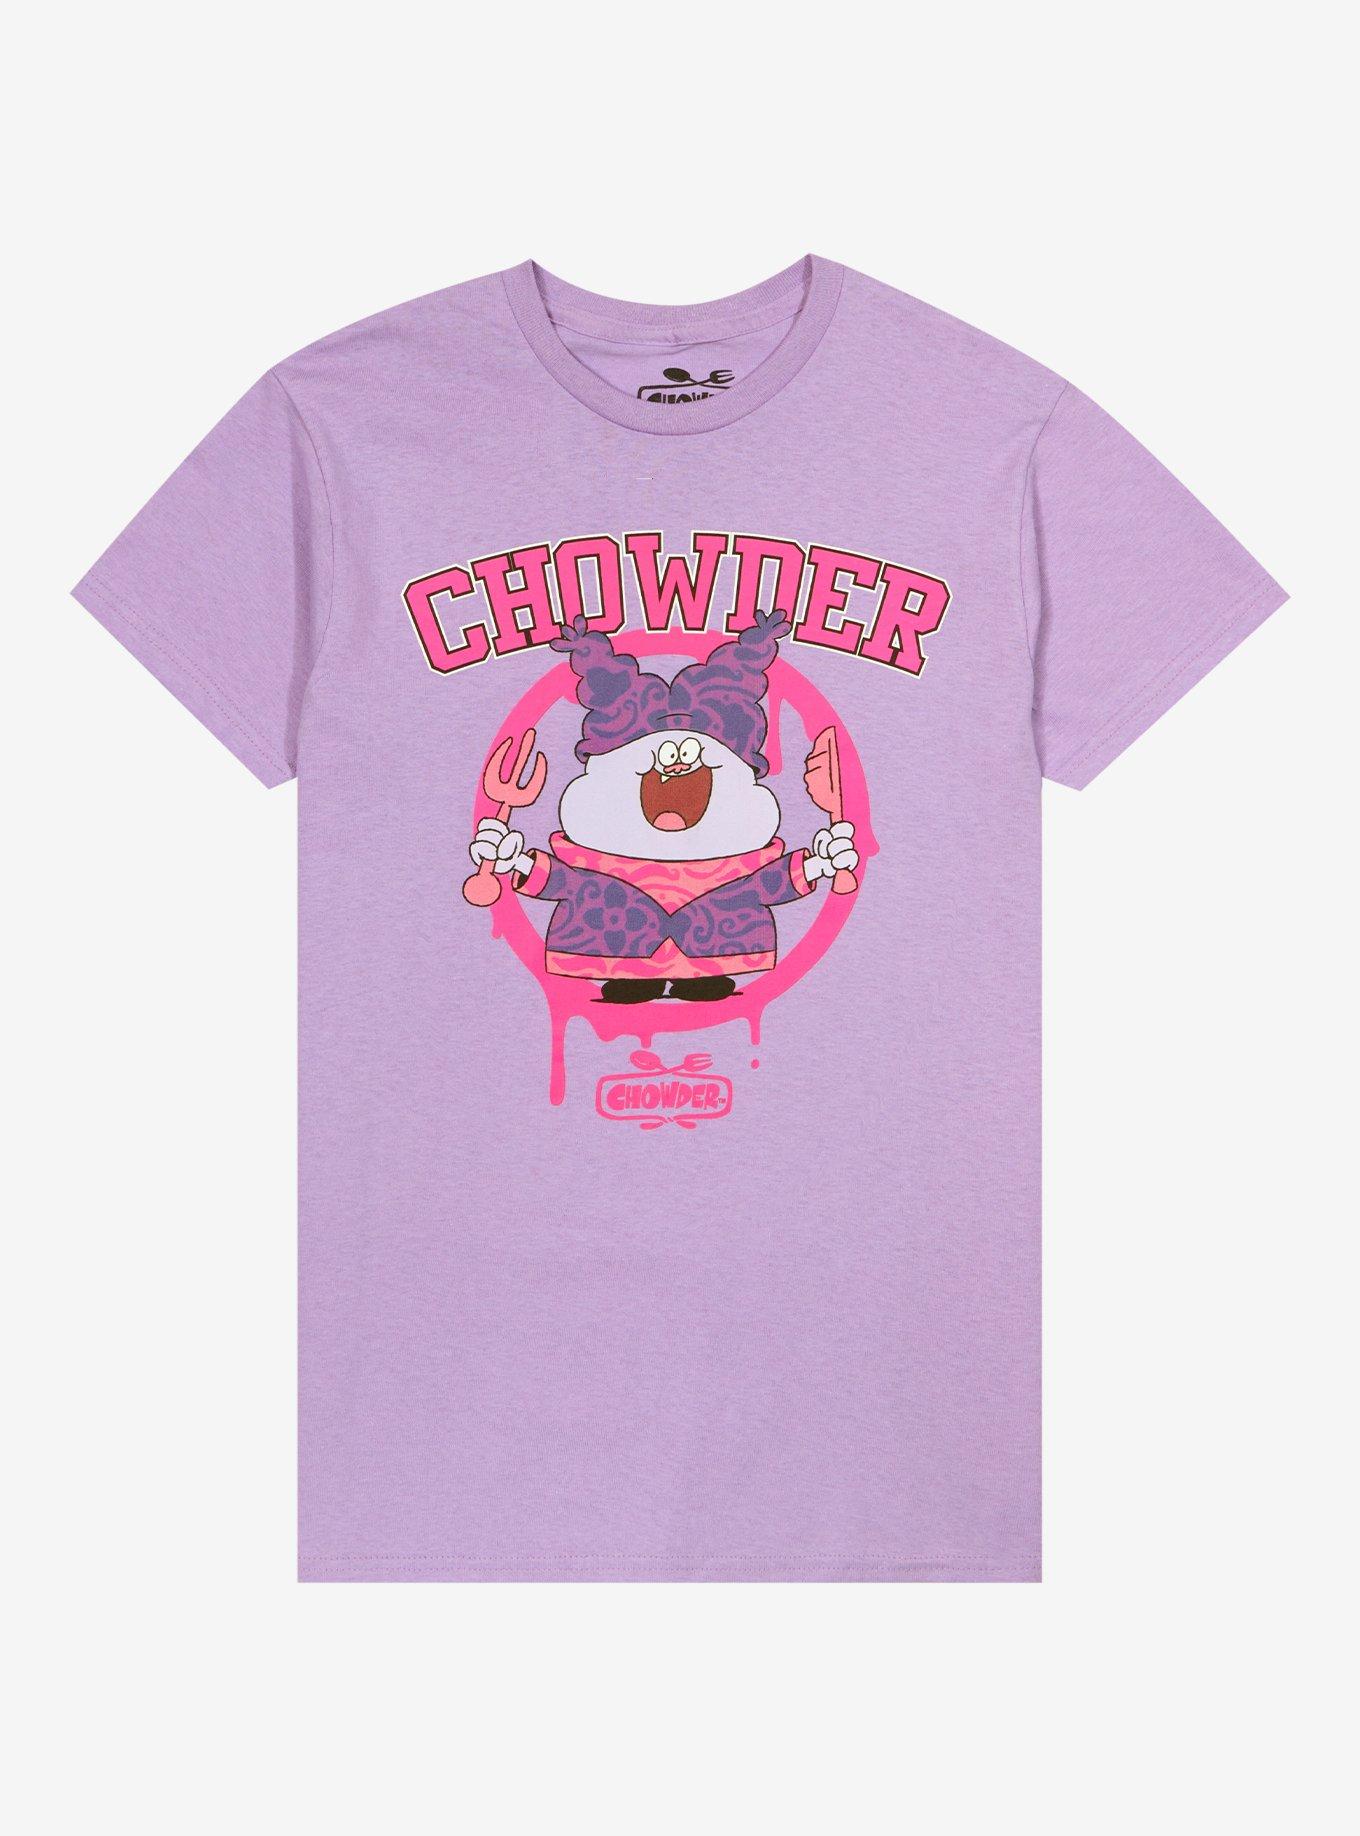 Chowder Portrait Pastel Boyfriend Fit Girls T-Shirt, MULTI, hi-res